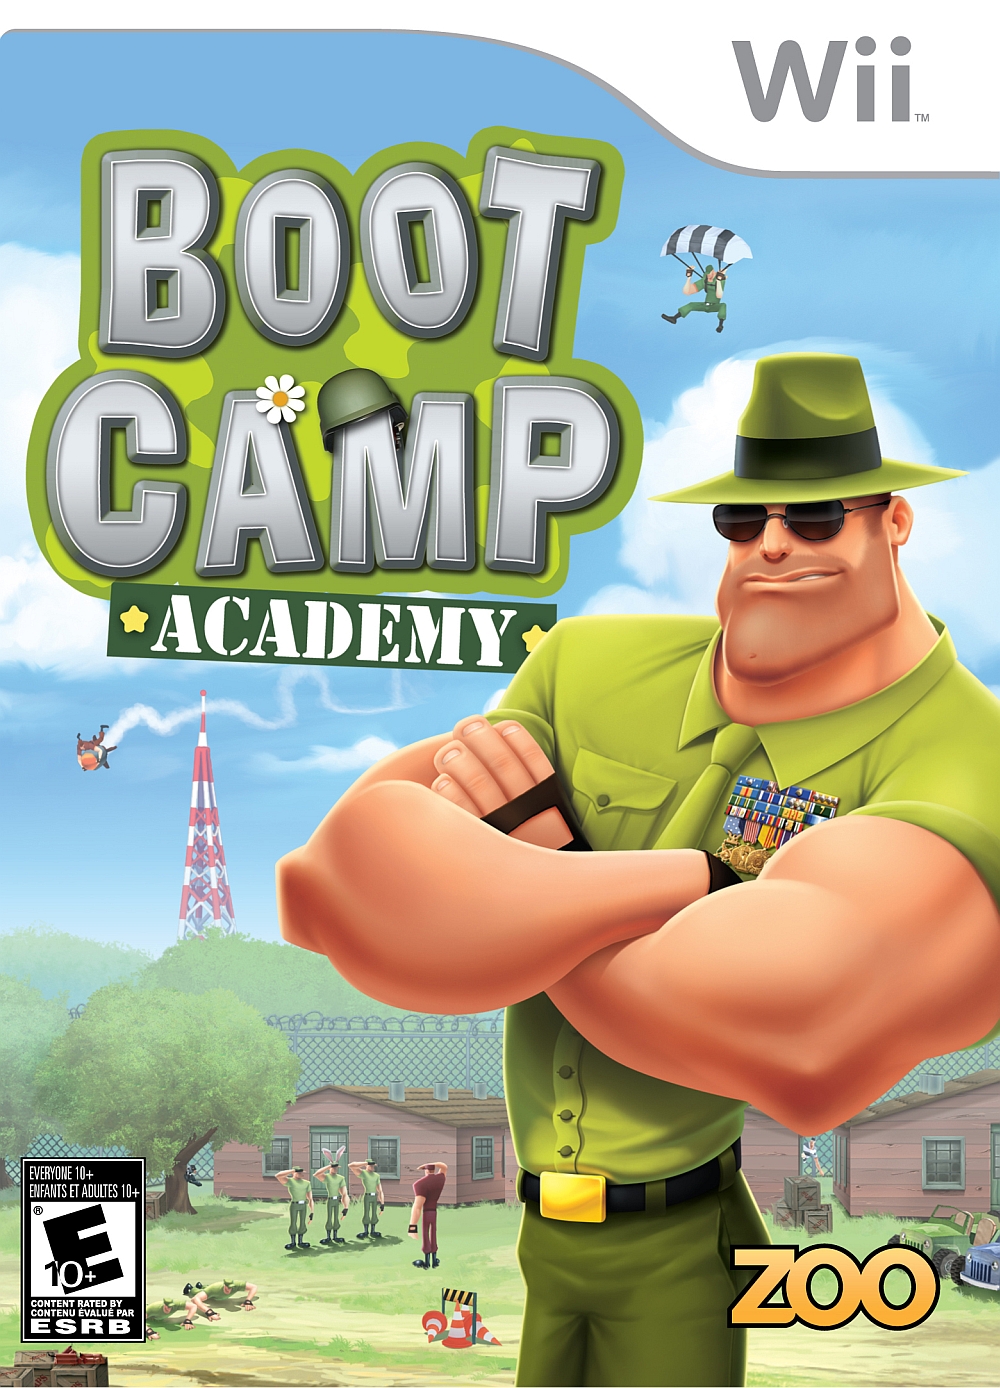 Игра камп. Bootcamp игра. Booty Camp. The Boot Camp. Игры на Wii вечеринка.